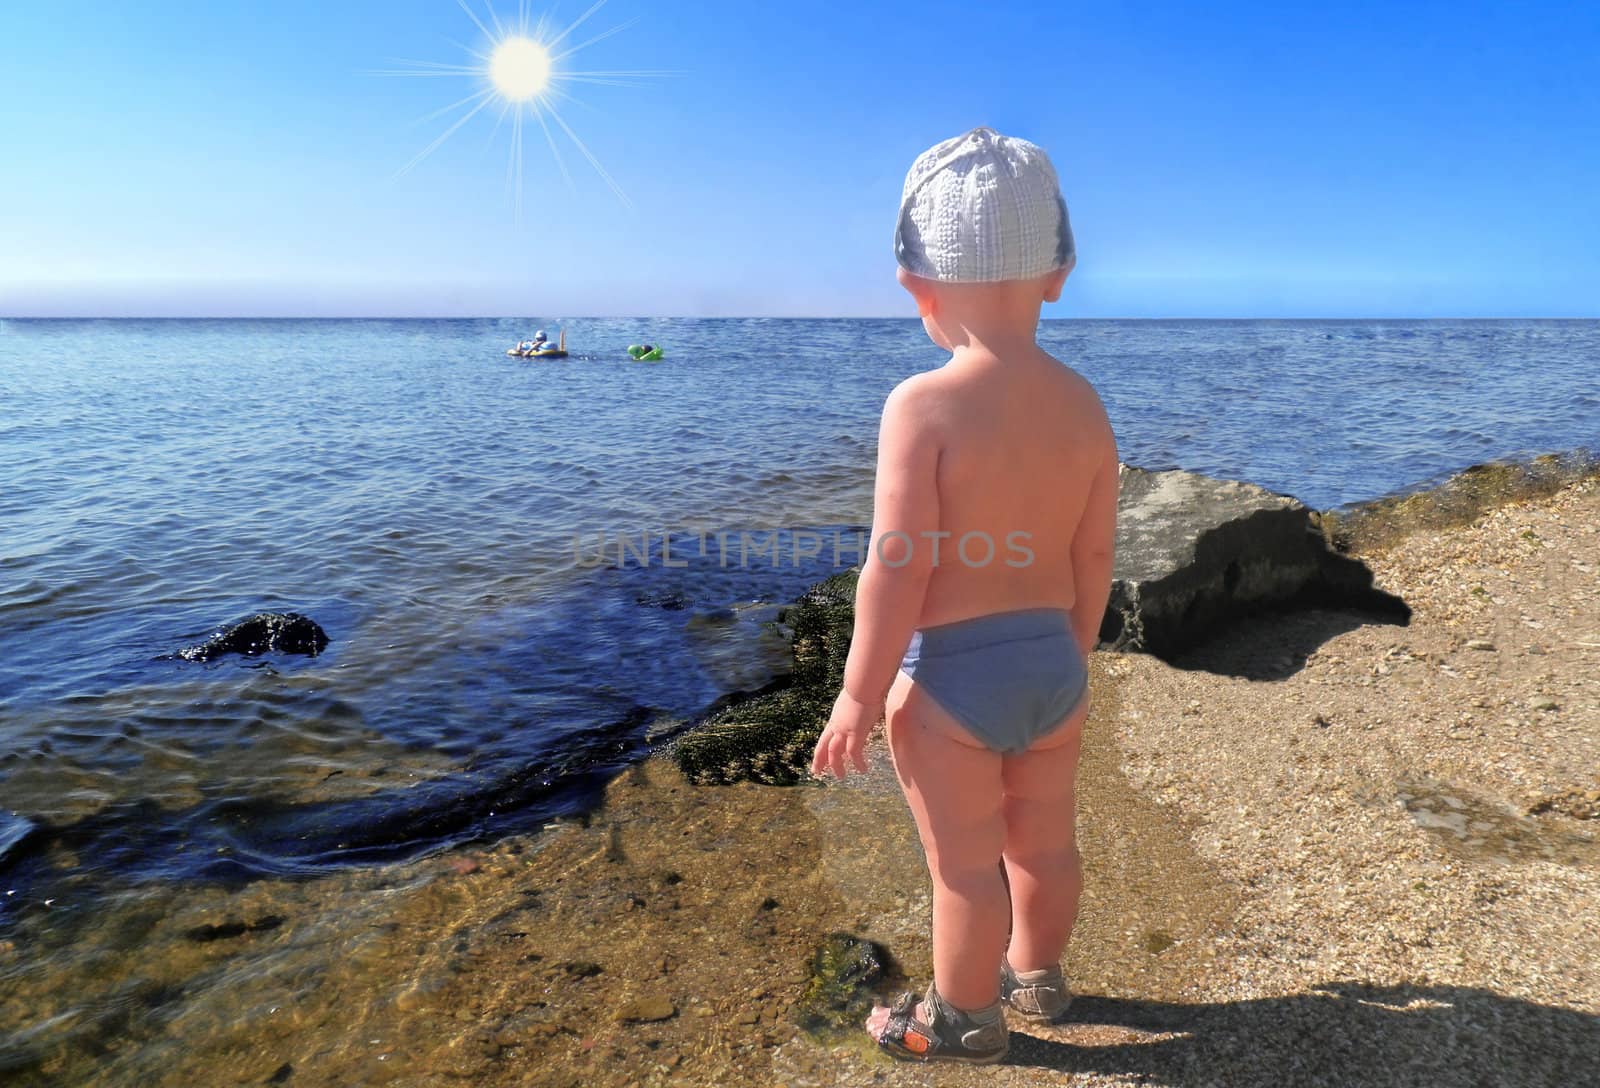 A little boy on the beach by NickNick